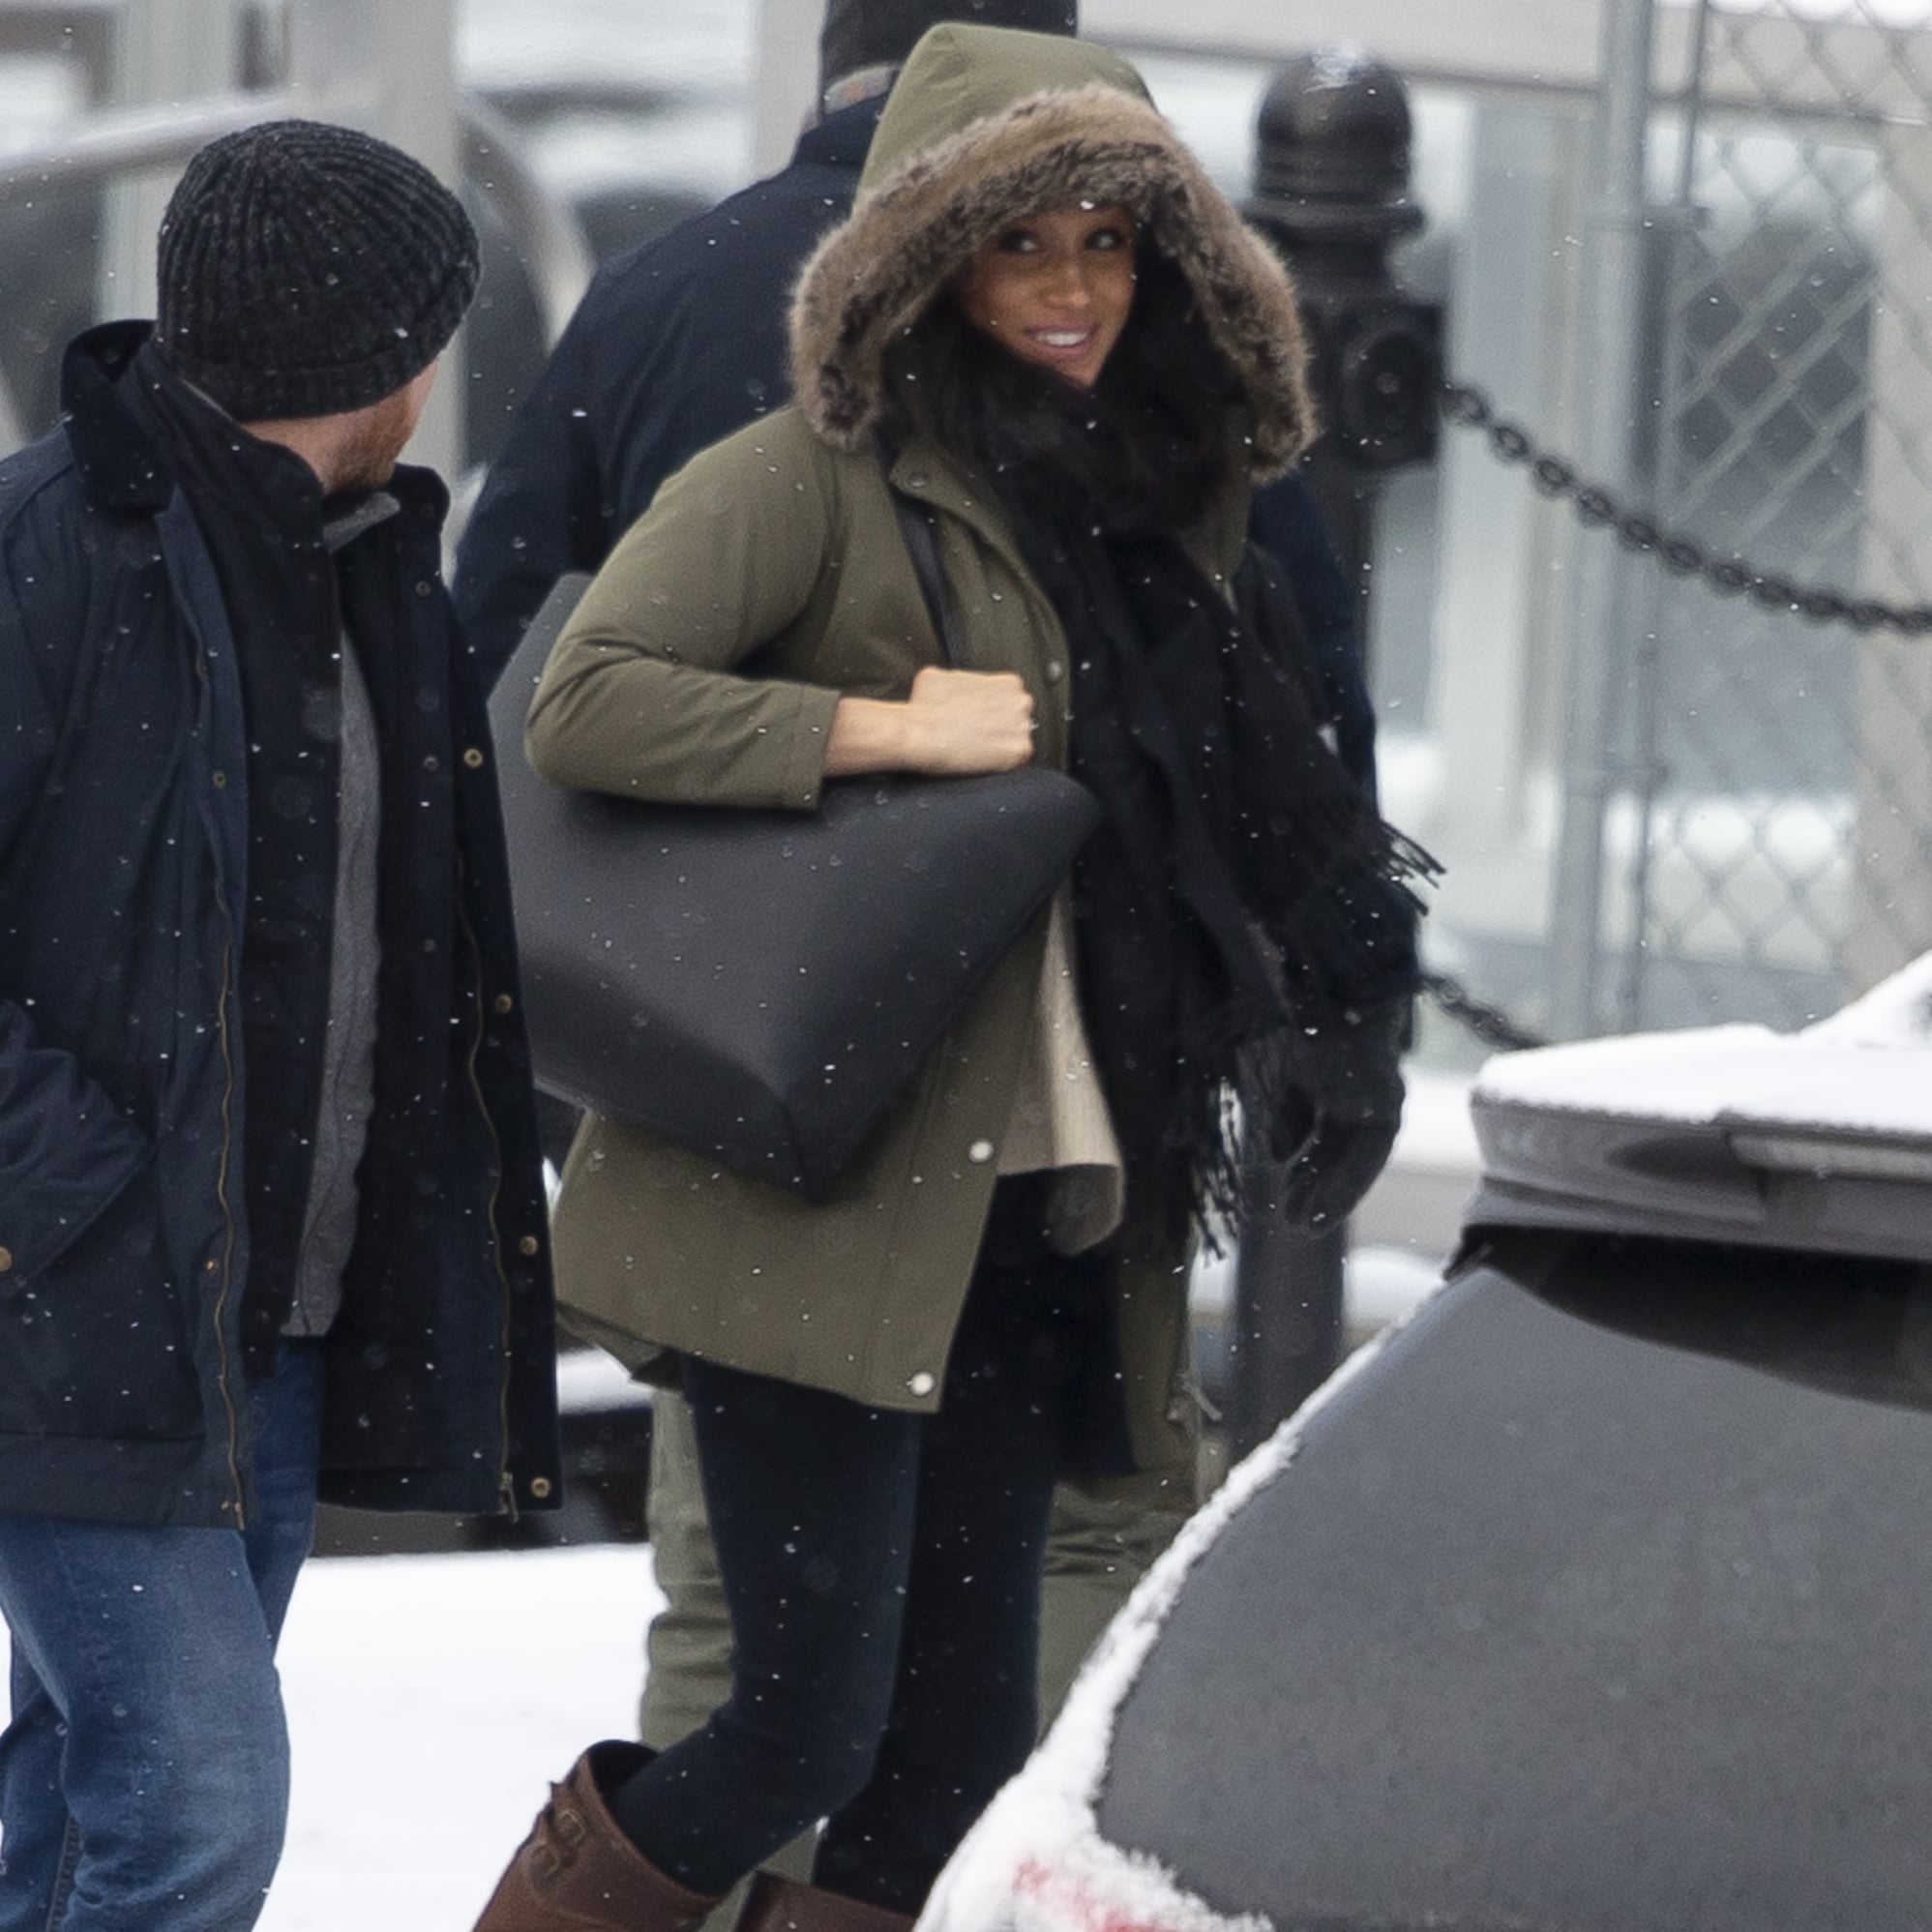 Meghan Markle Carried a Black Cuyana Tote Bag in Canada